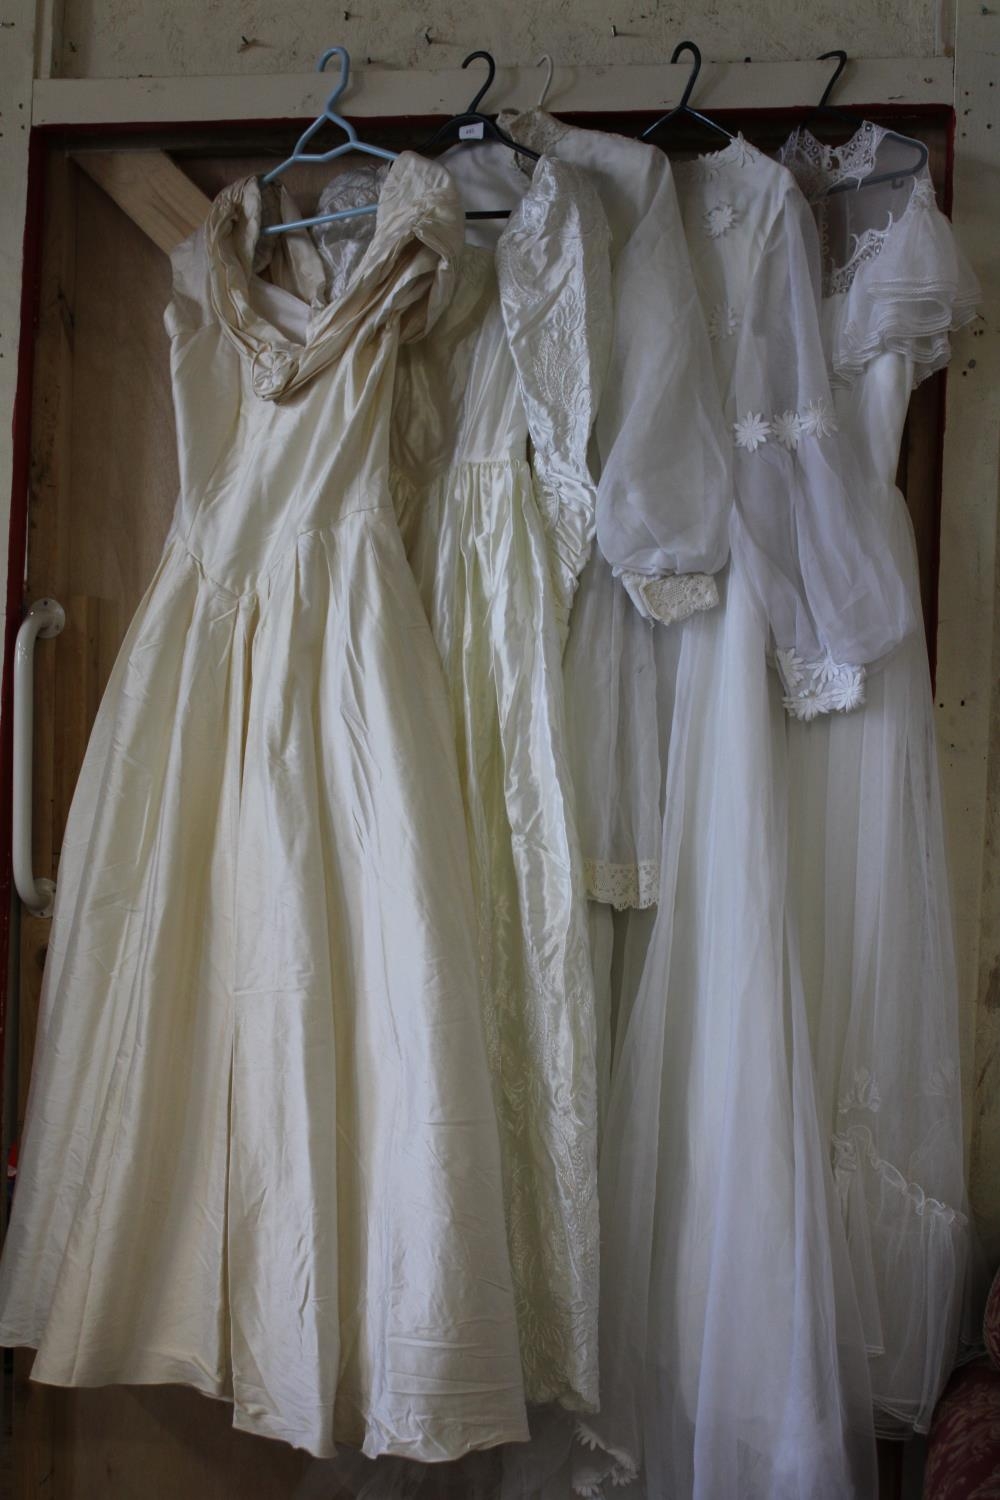 5 vintage wedding dresses